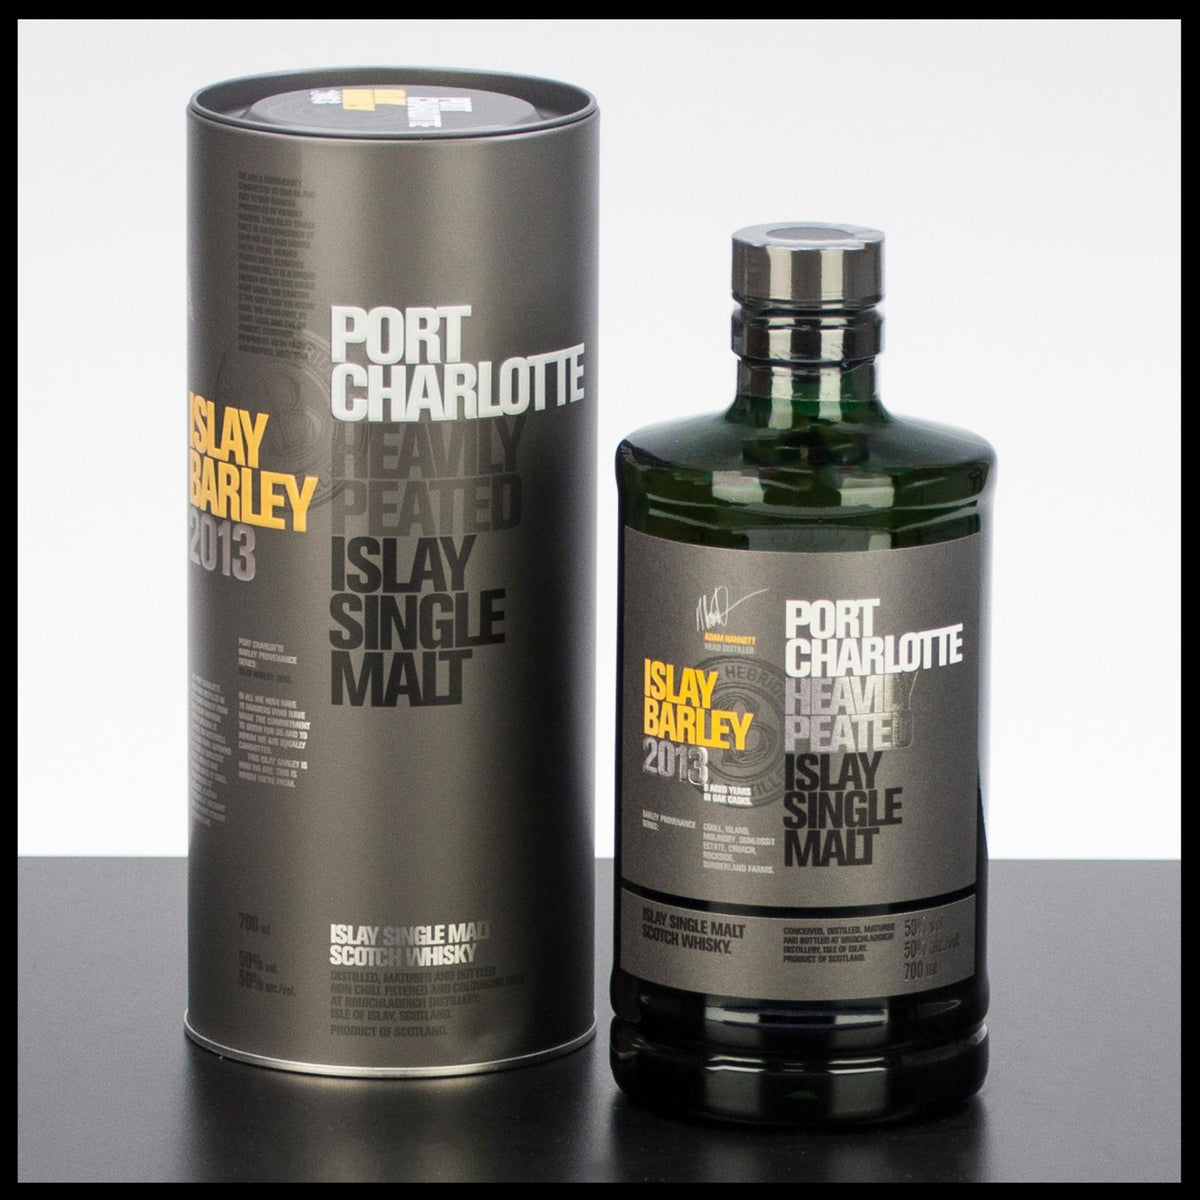 Port Charlotte Islay Barley 2013 Heavily Peated Islay Single Malt Whisky 0,7L - 50% Vol. - Trinklusiv